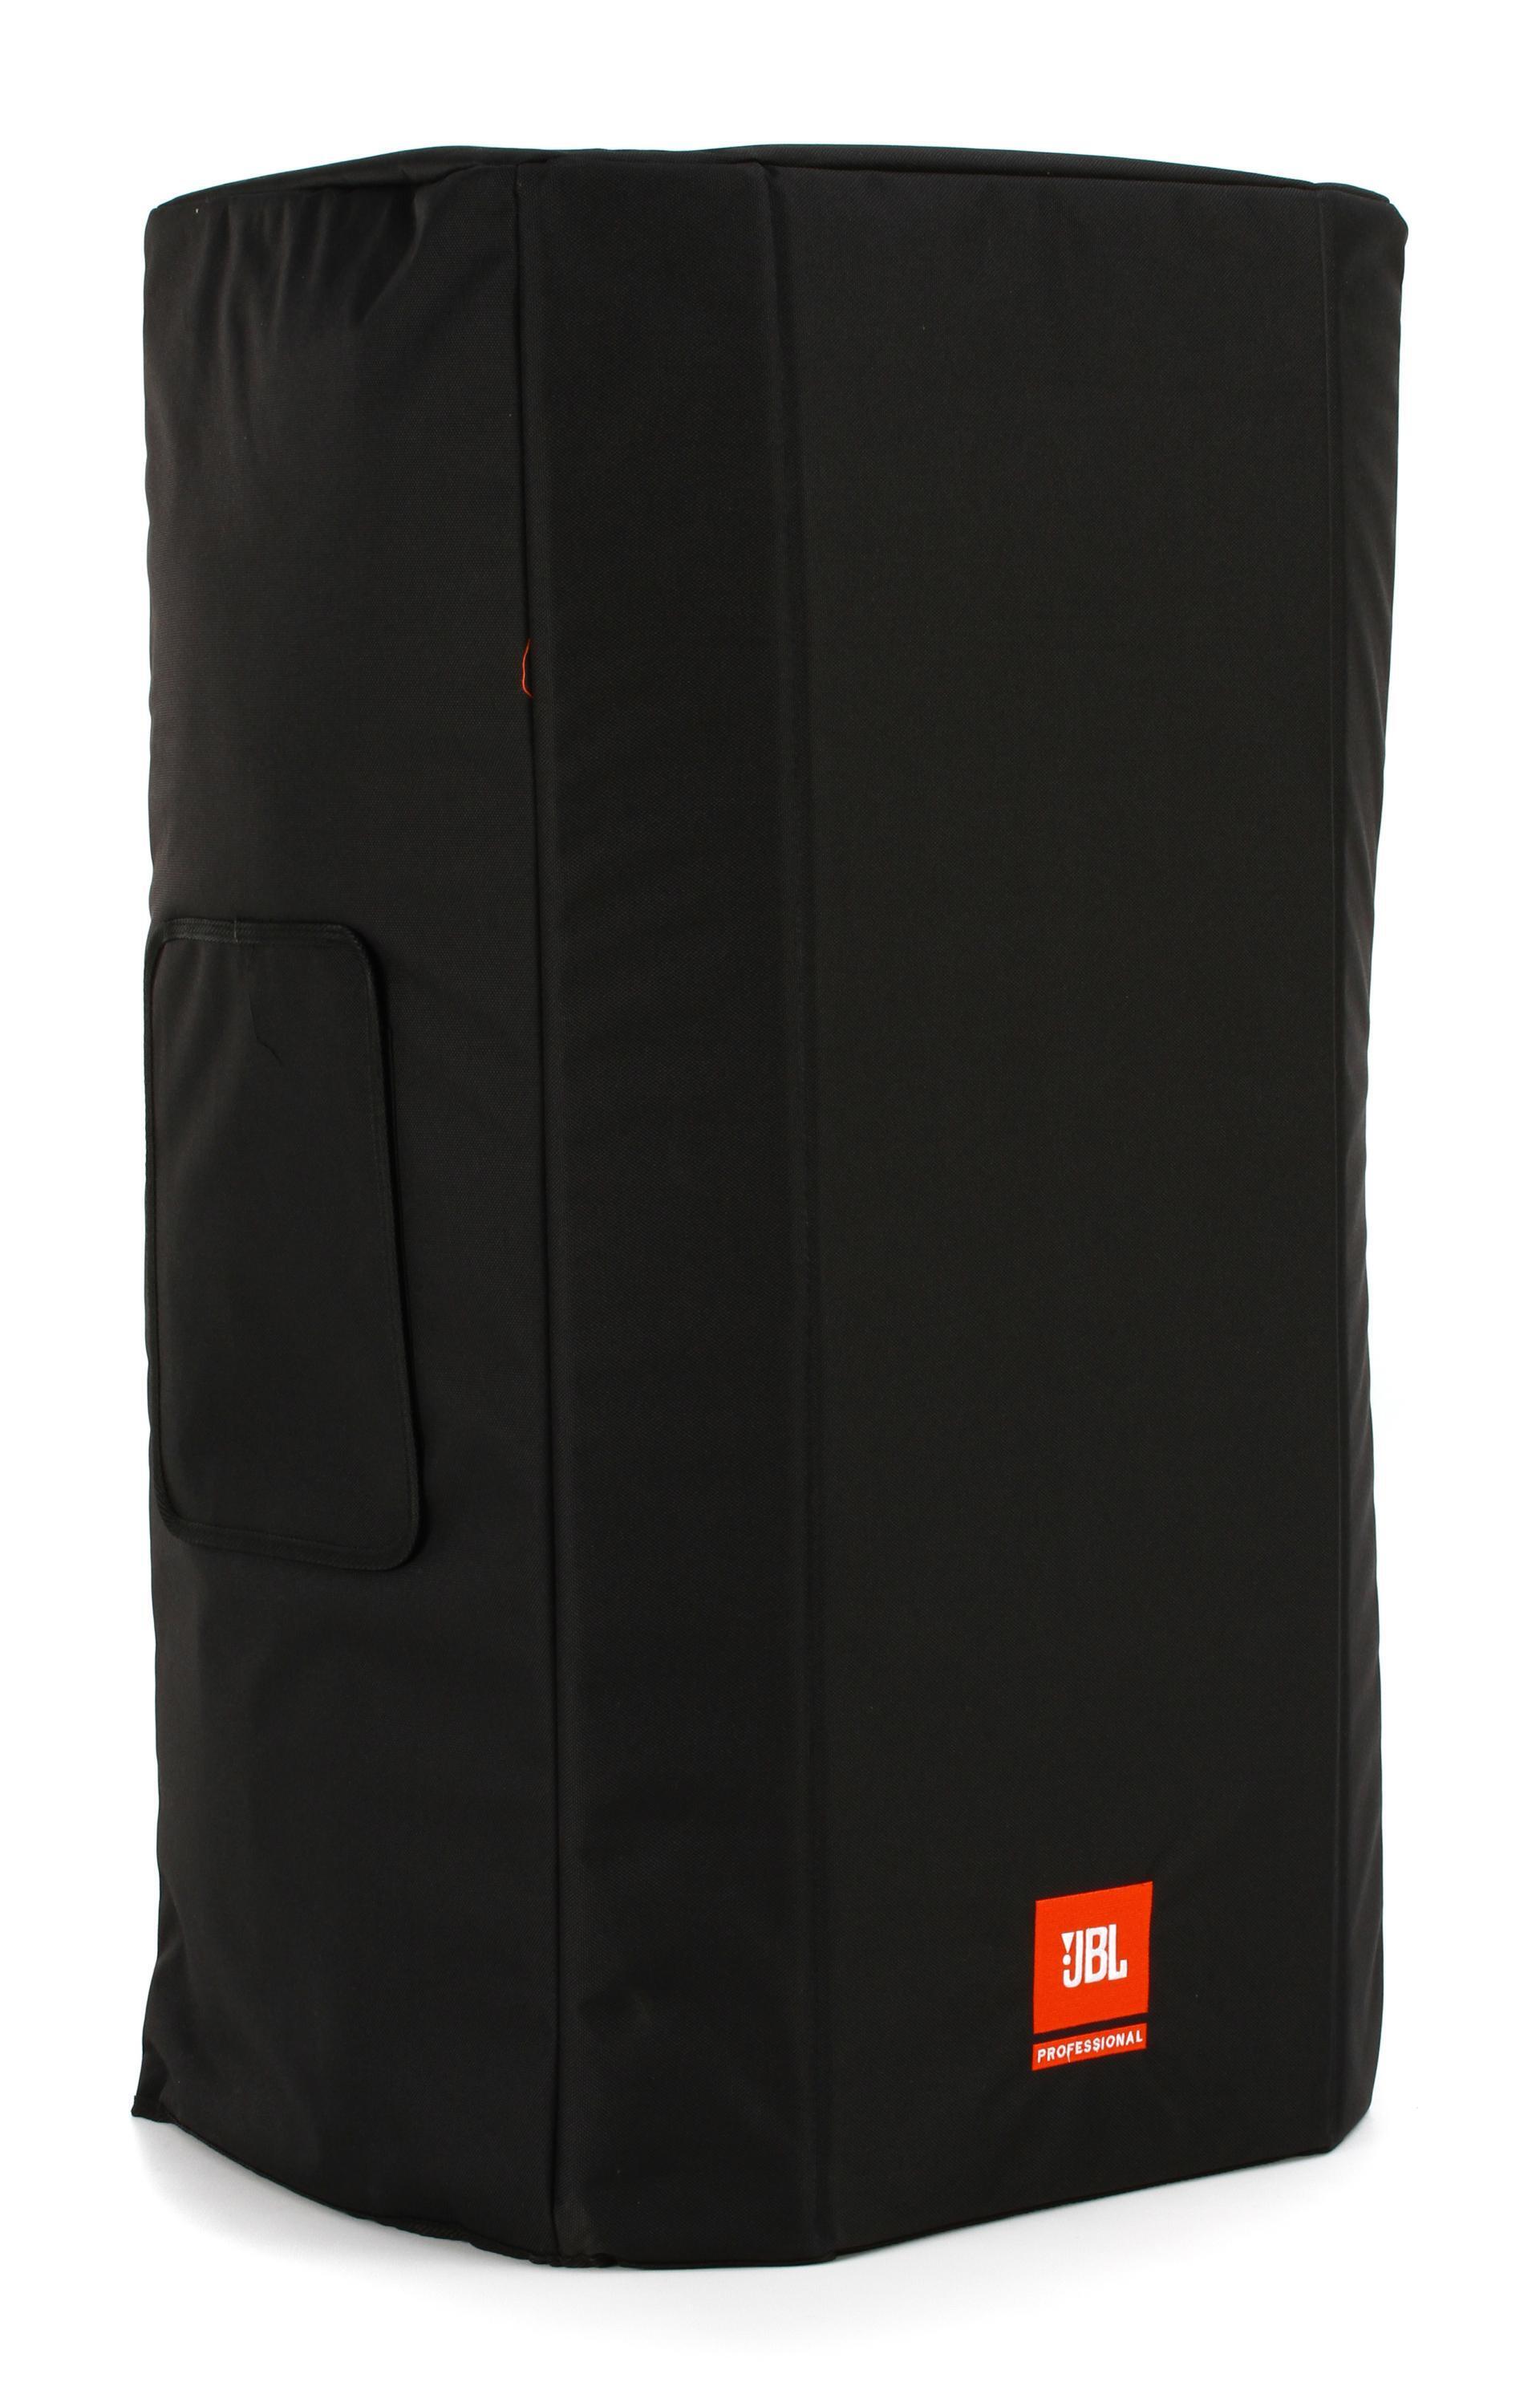 Bundled Item: JBL Bags SRX835P-CVR-DLX Deluxe Speaker Cover for SRX835P